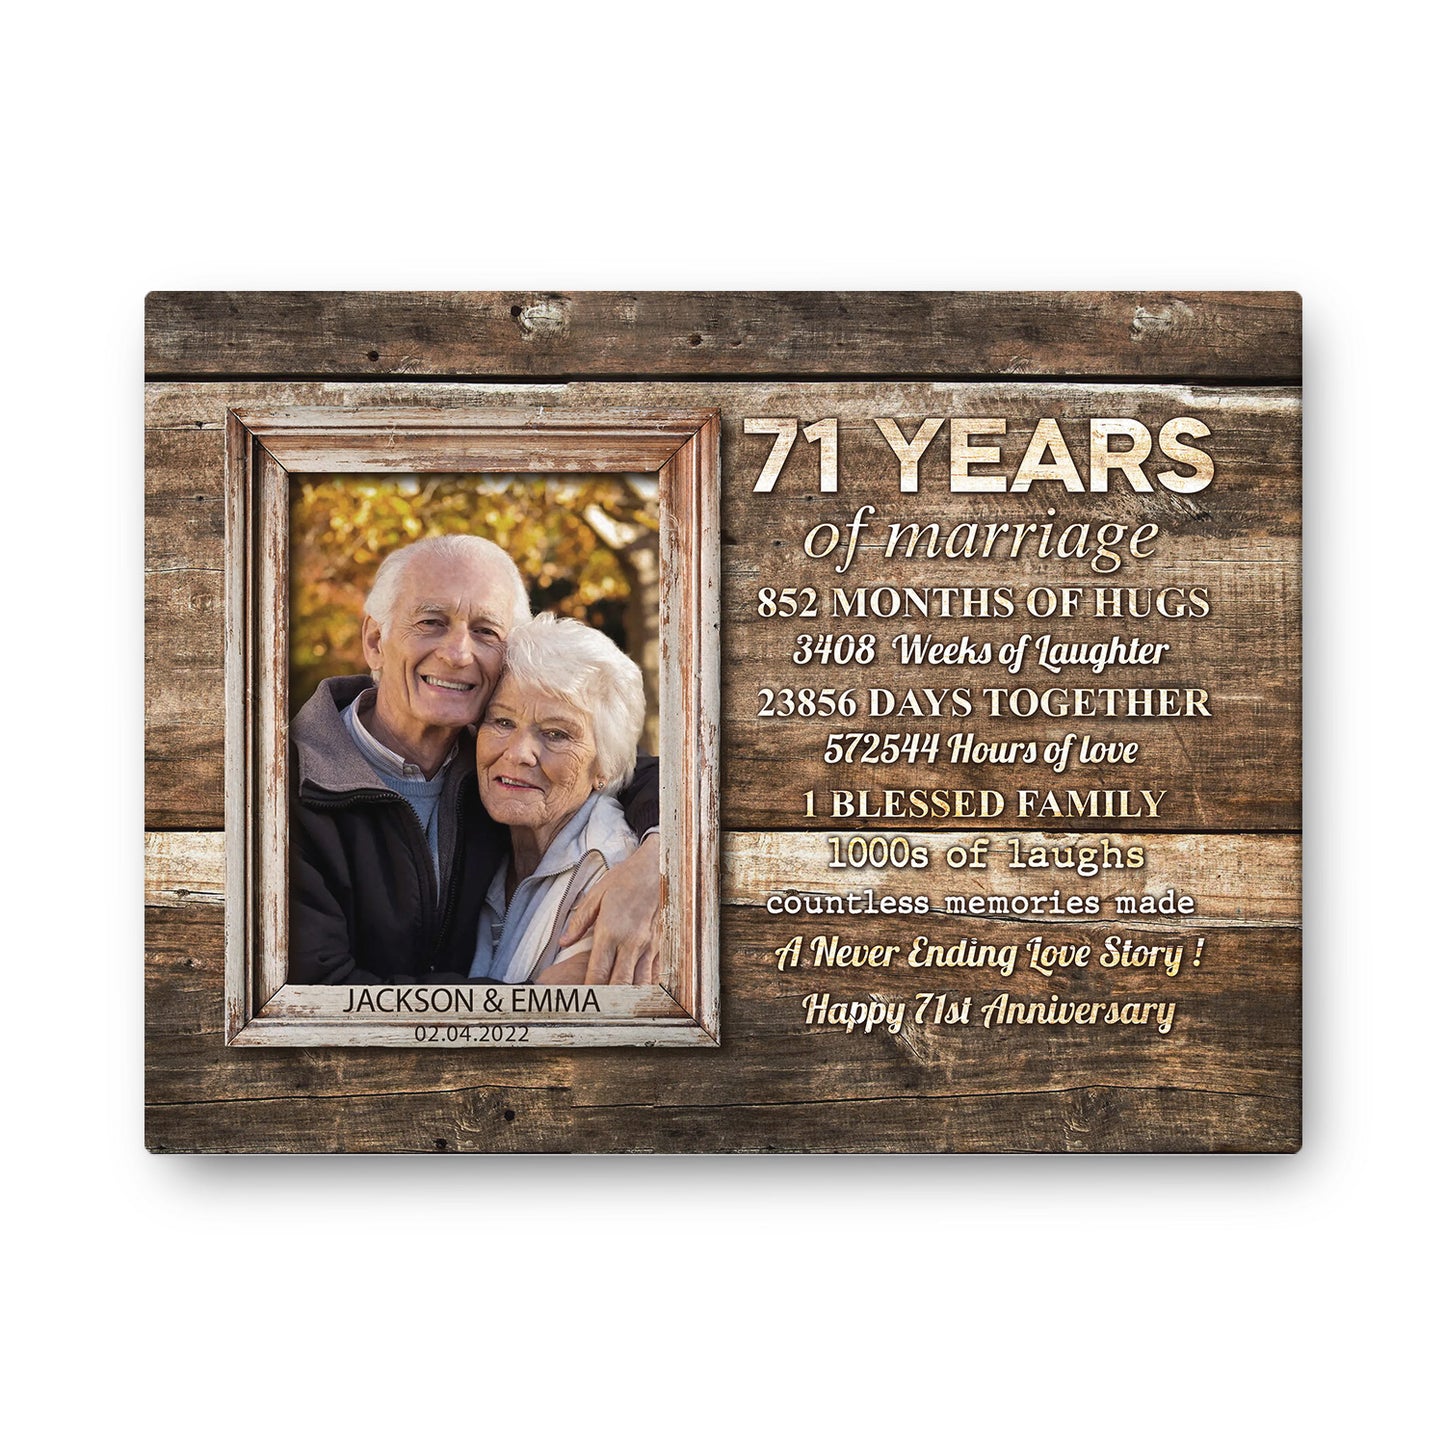 71 Years Of Marriage Custom Image Anniversary Canvas